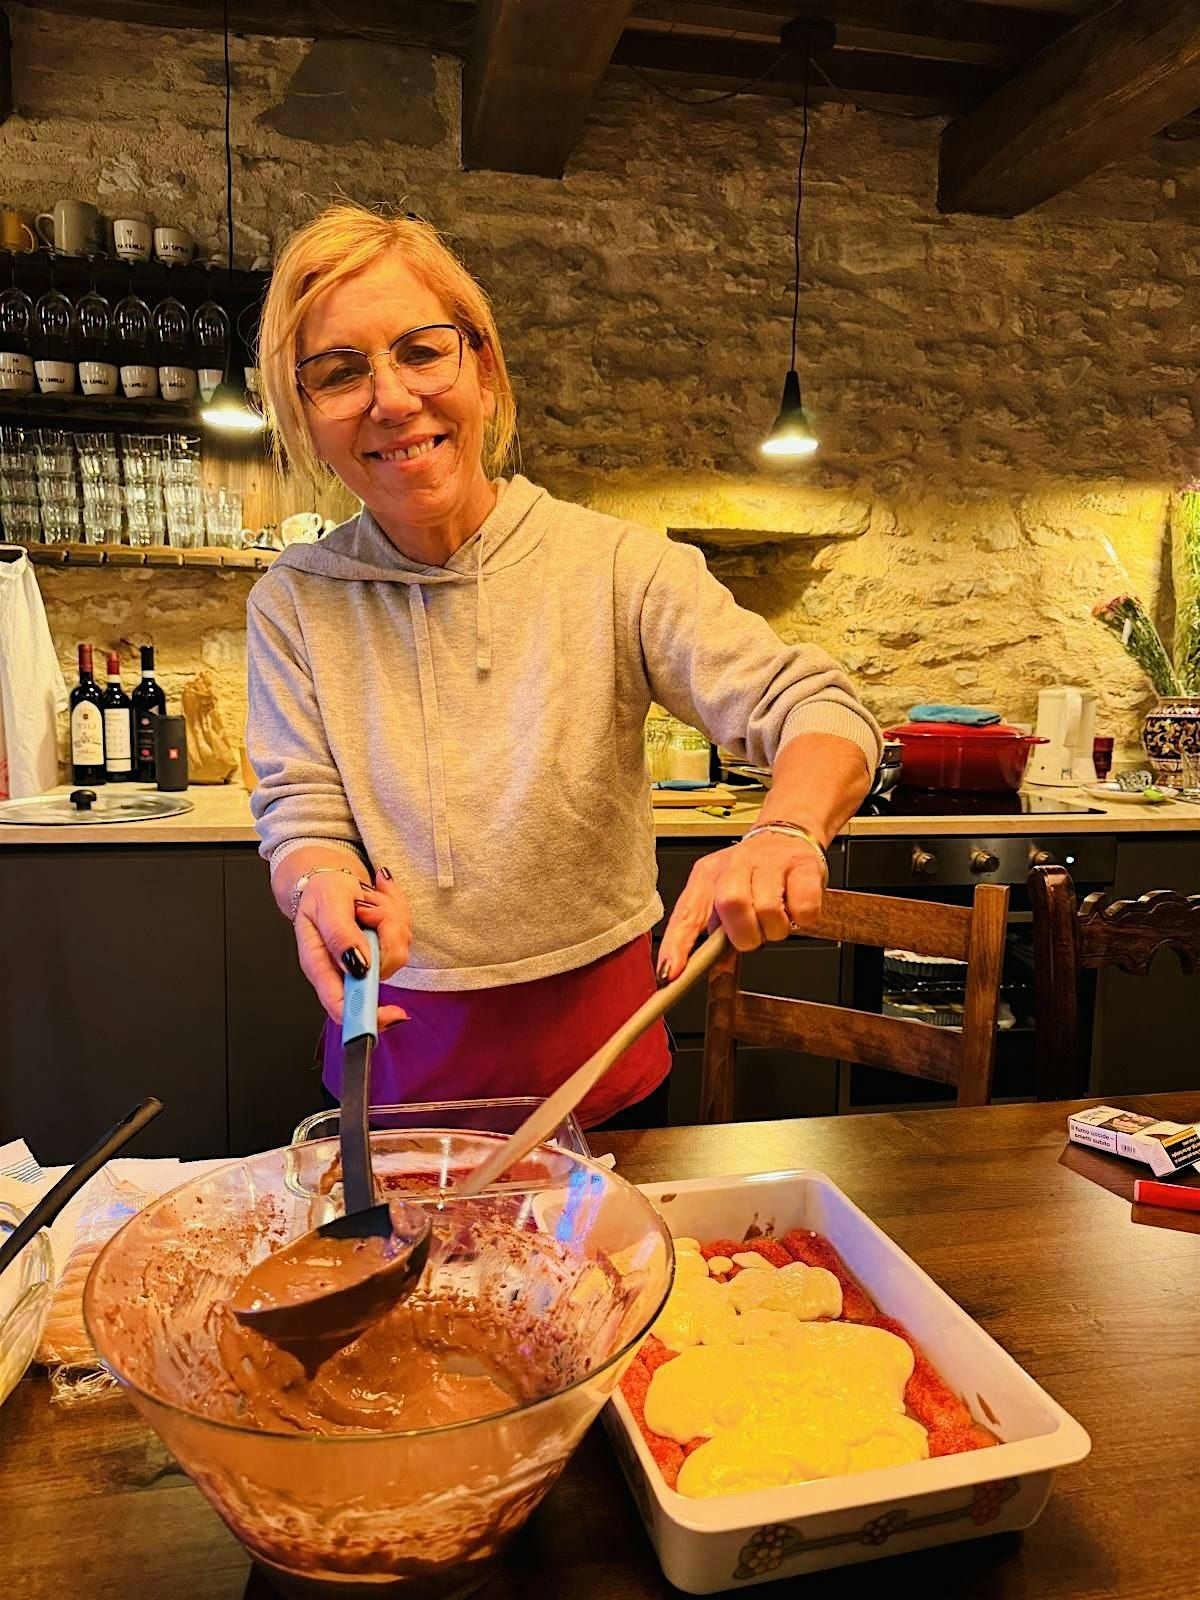 Pranzo Umbro, original italienisches Mittagsmen\u00fc